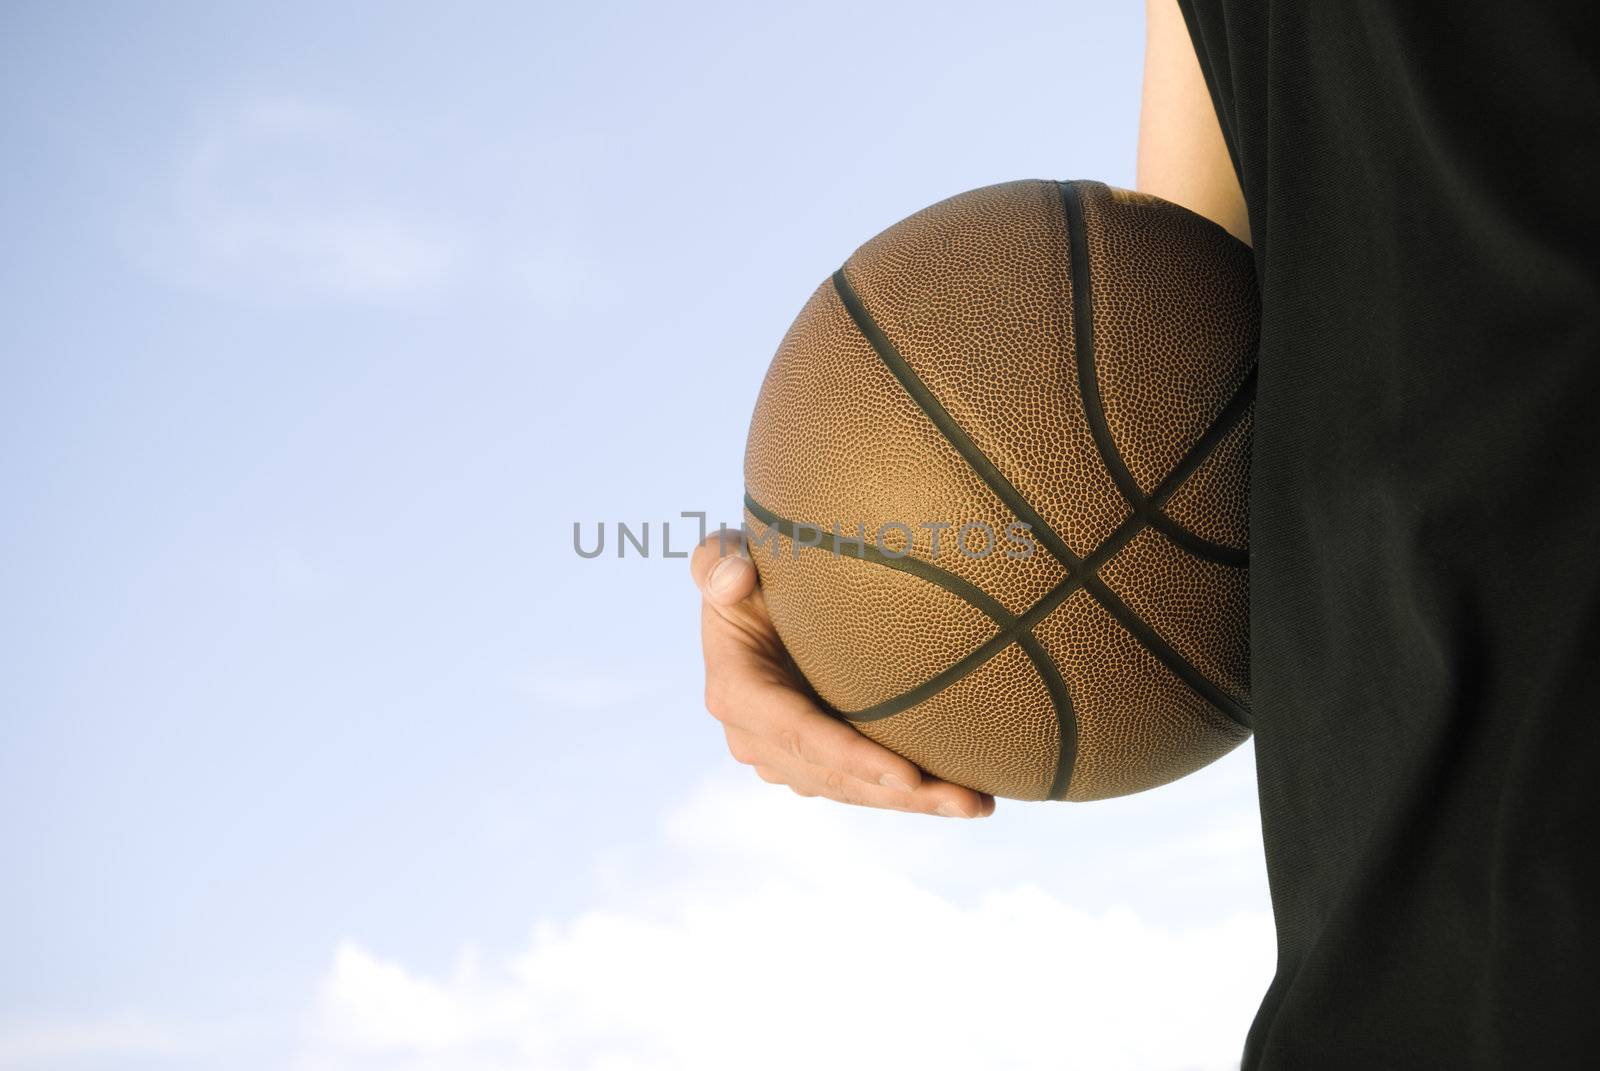 basketball by Kuzma